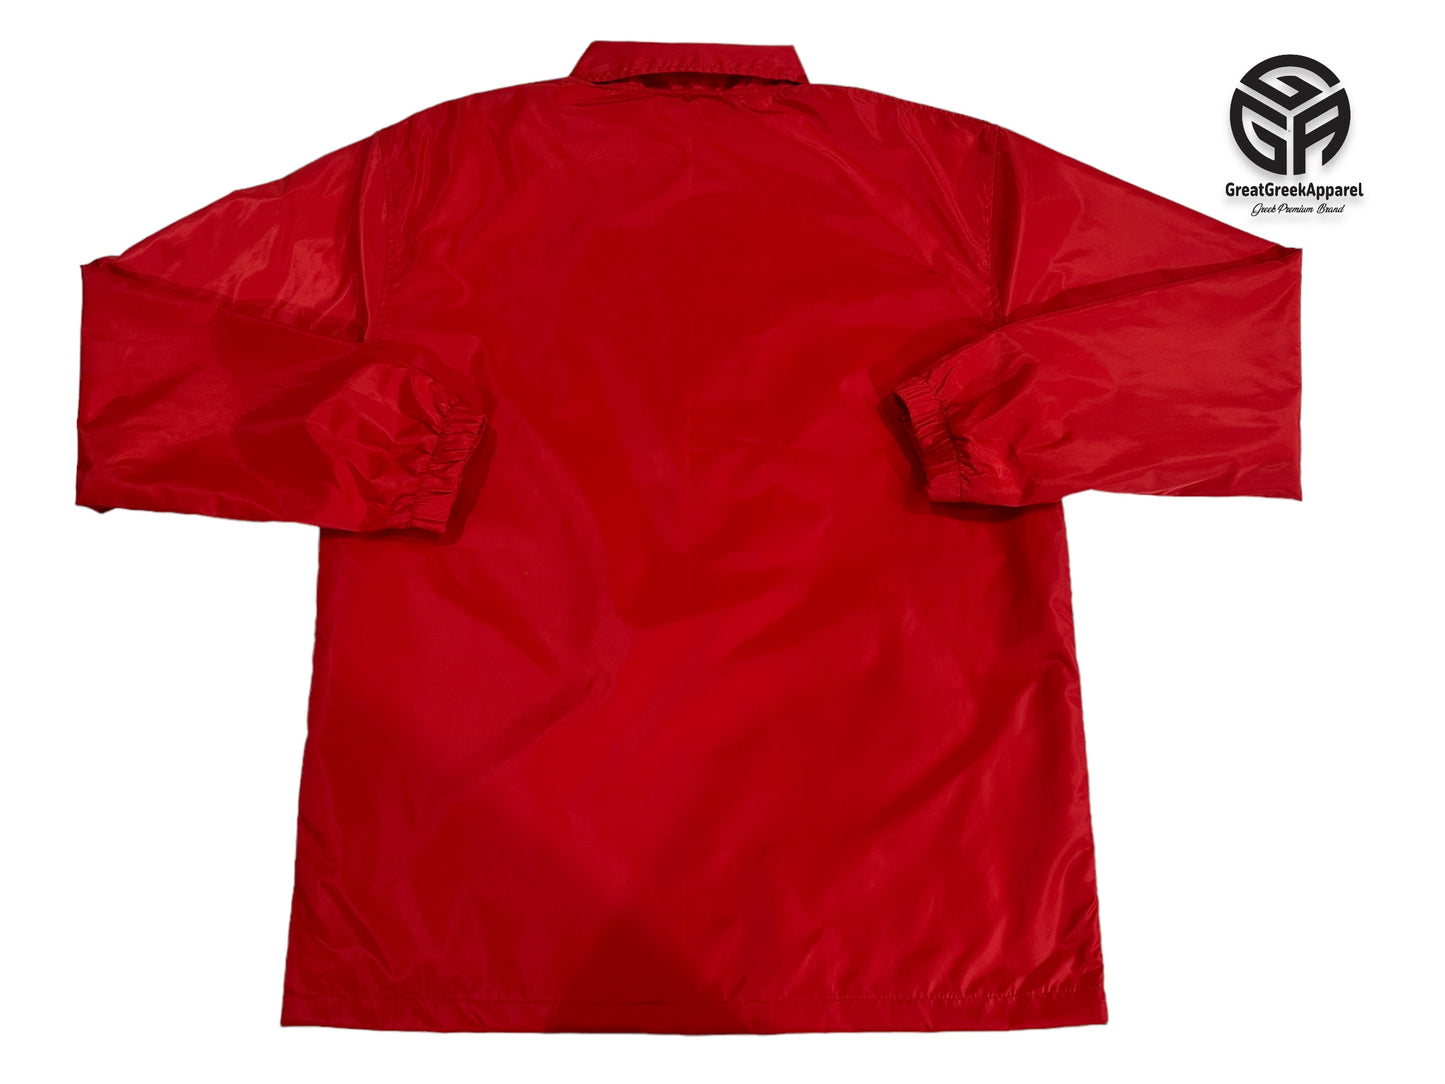 Kappa Waterproof Red Hot Coach jacket